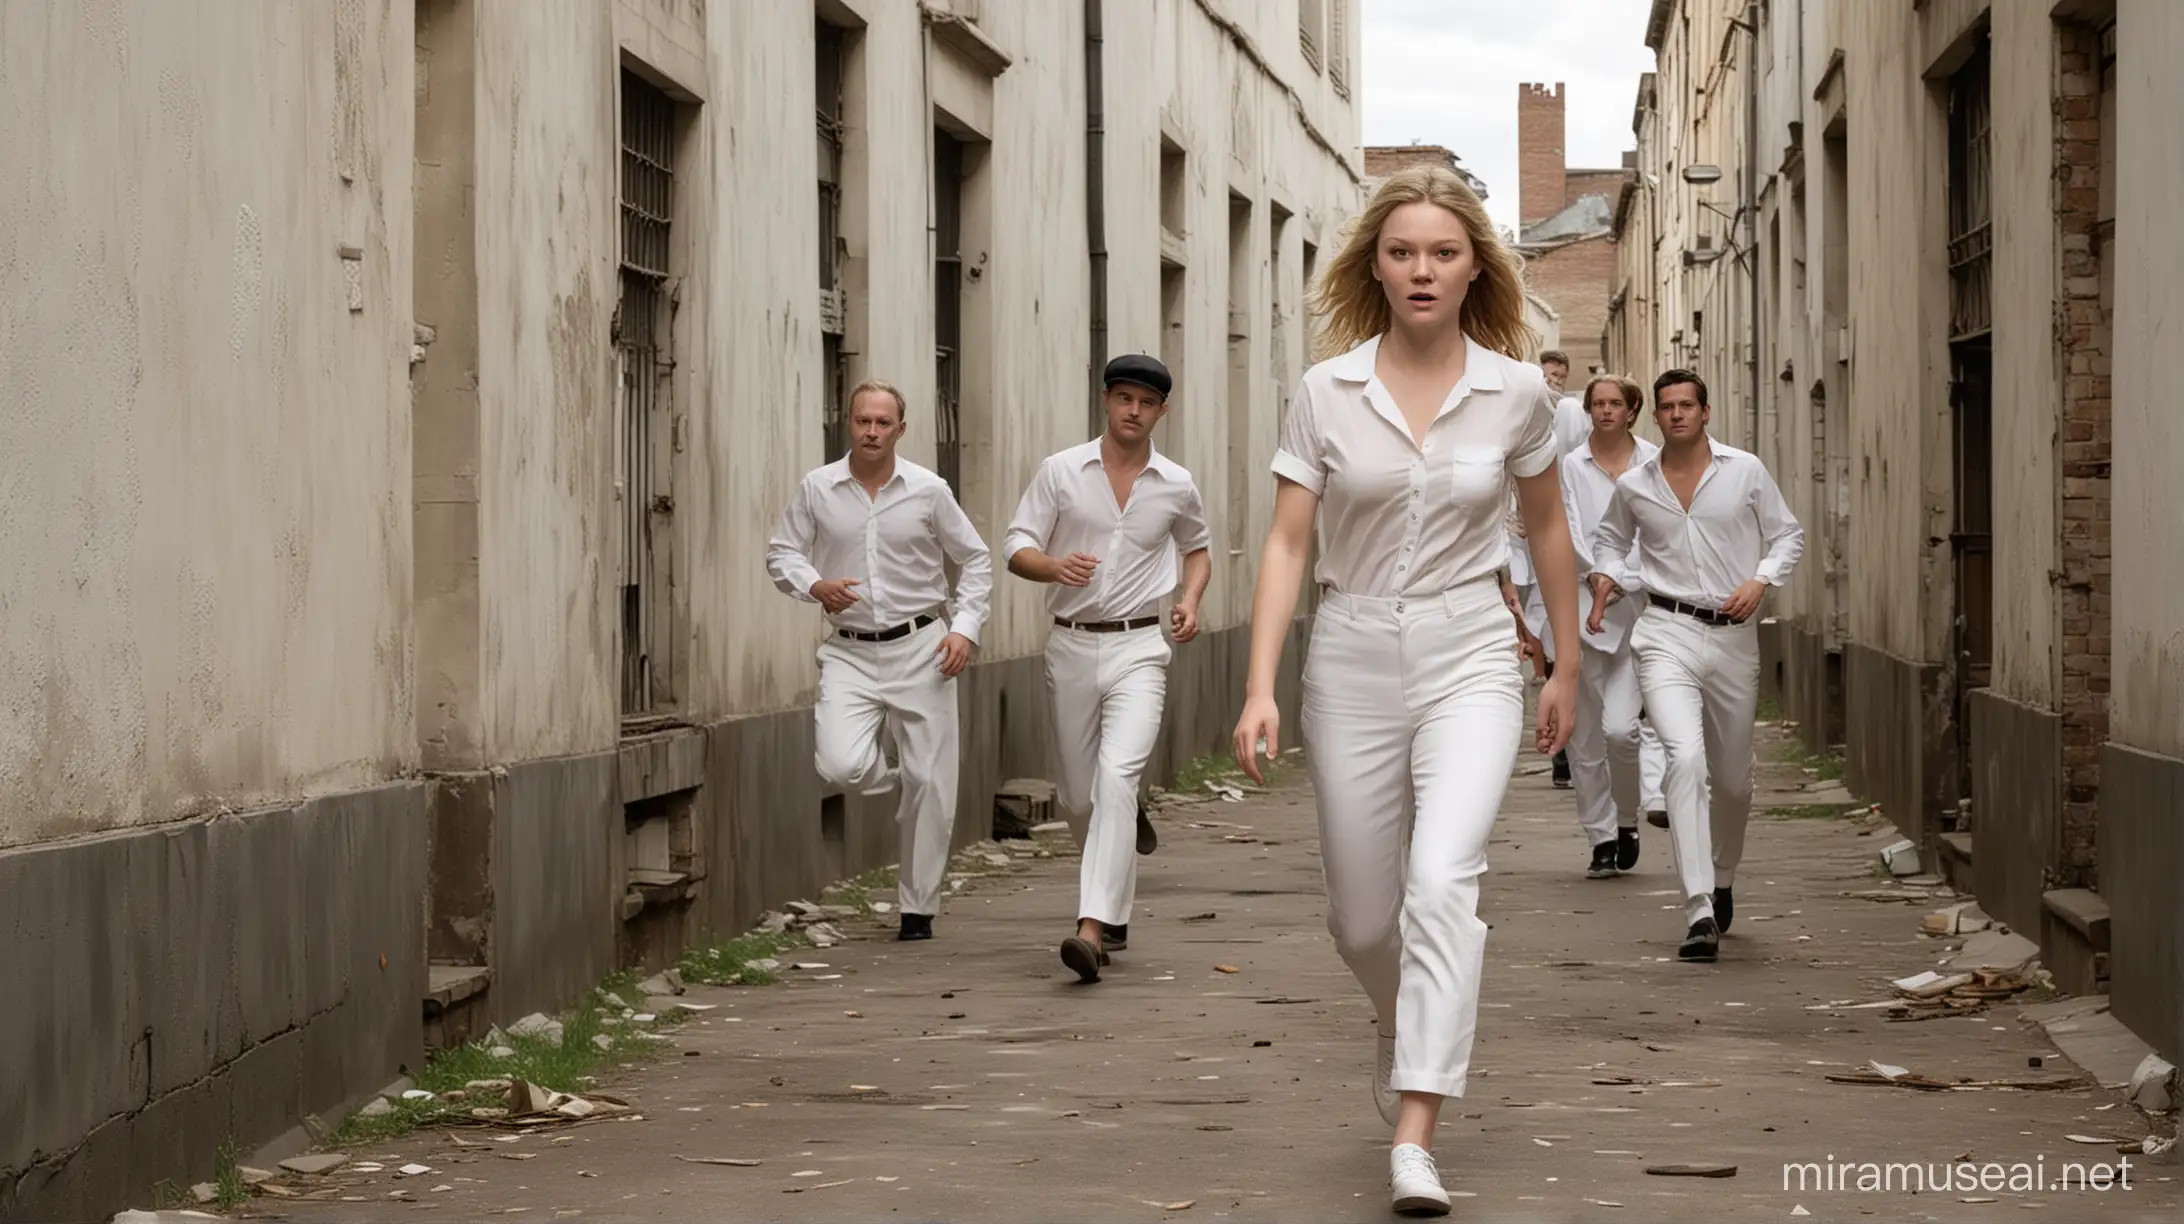 Julia Stiles Lookalike Fleeing Gang in White Attire Urban Chase Artwork